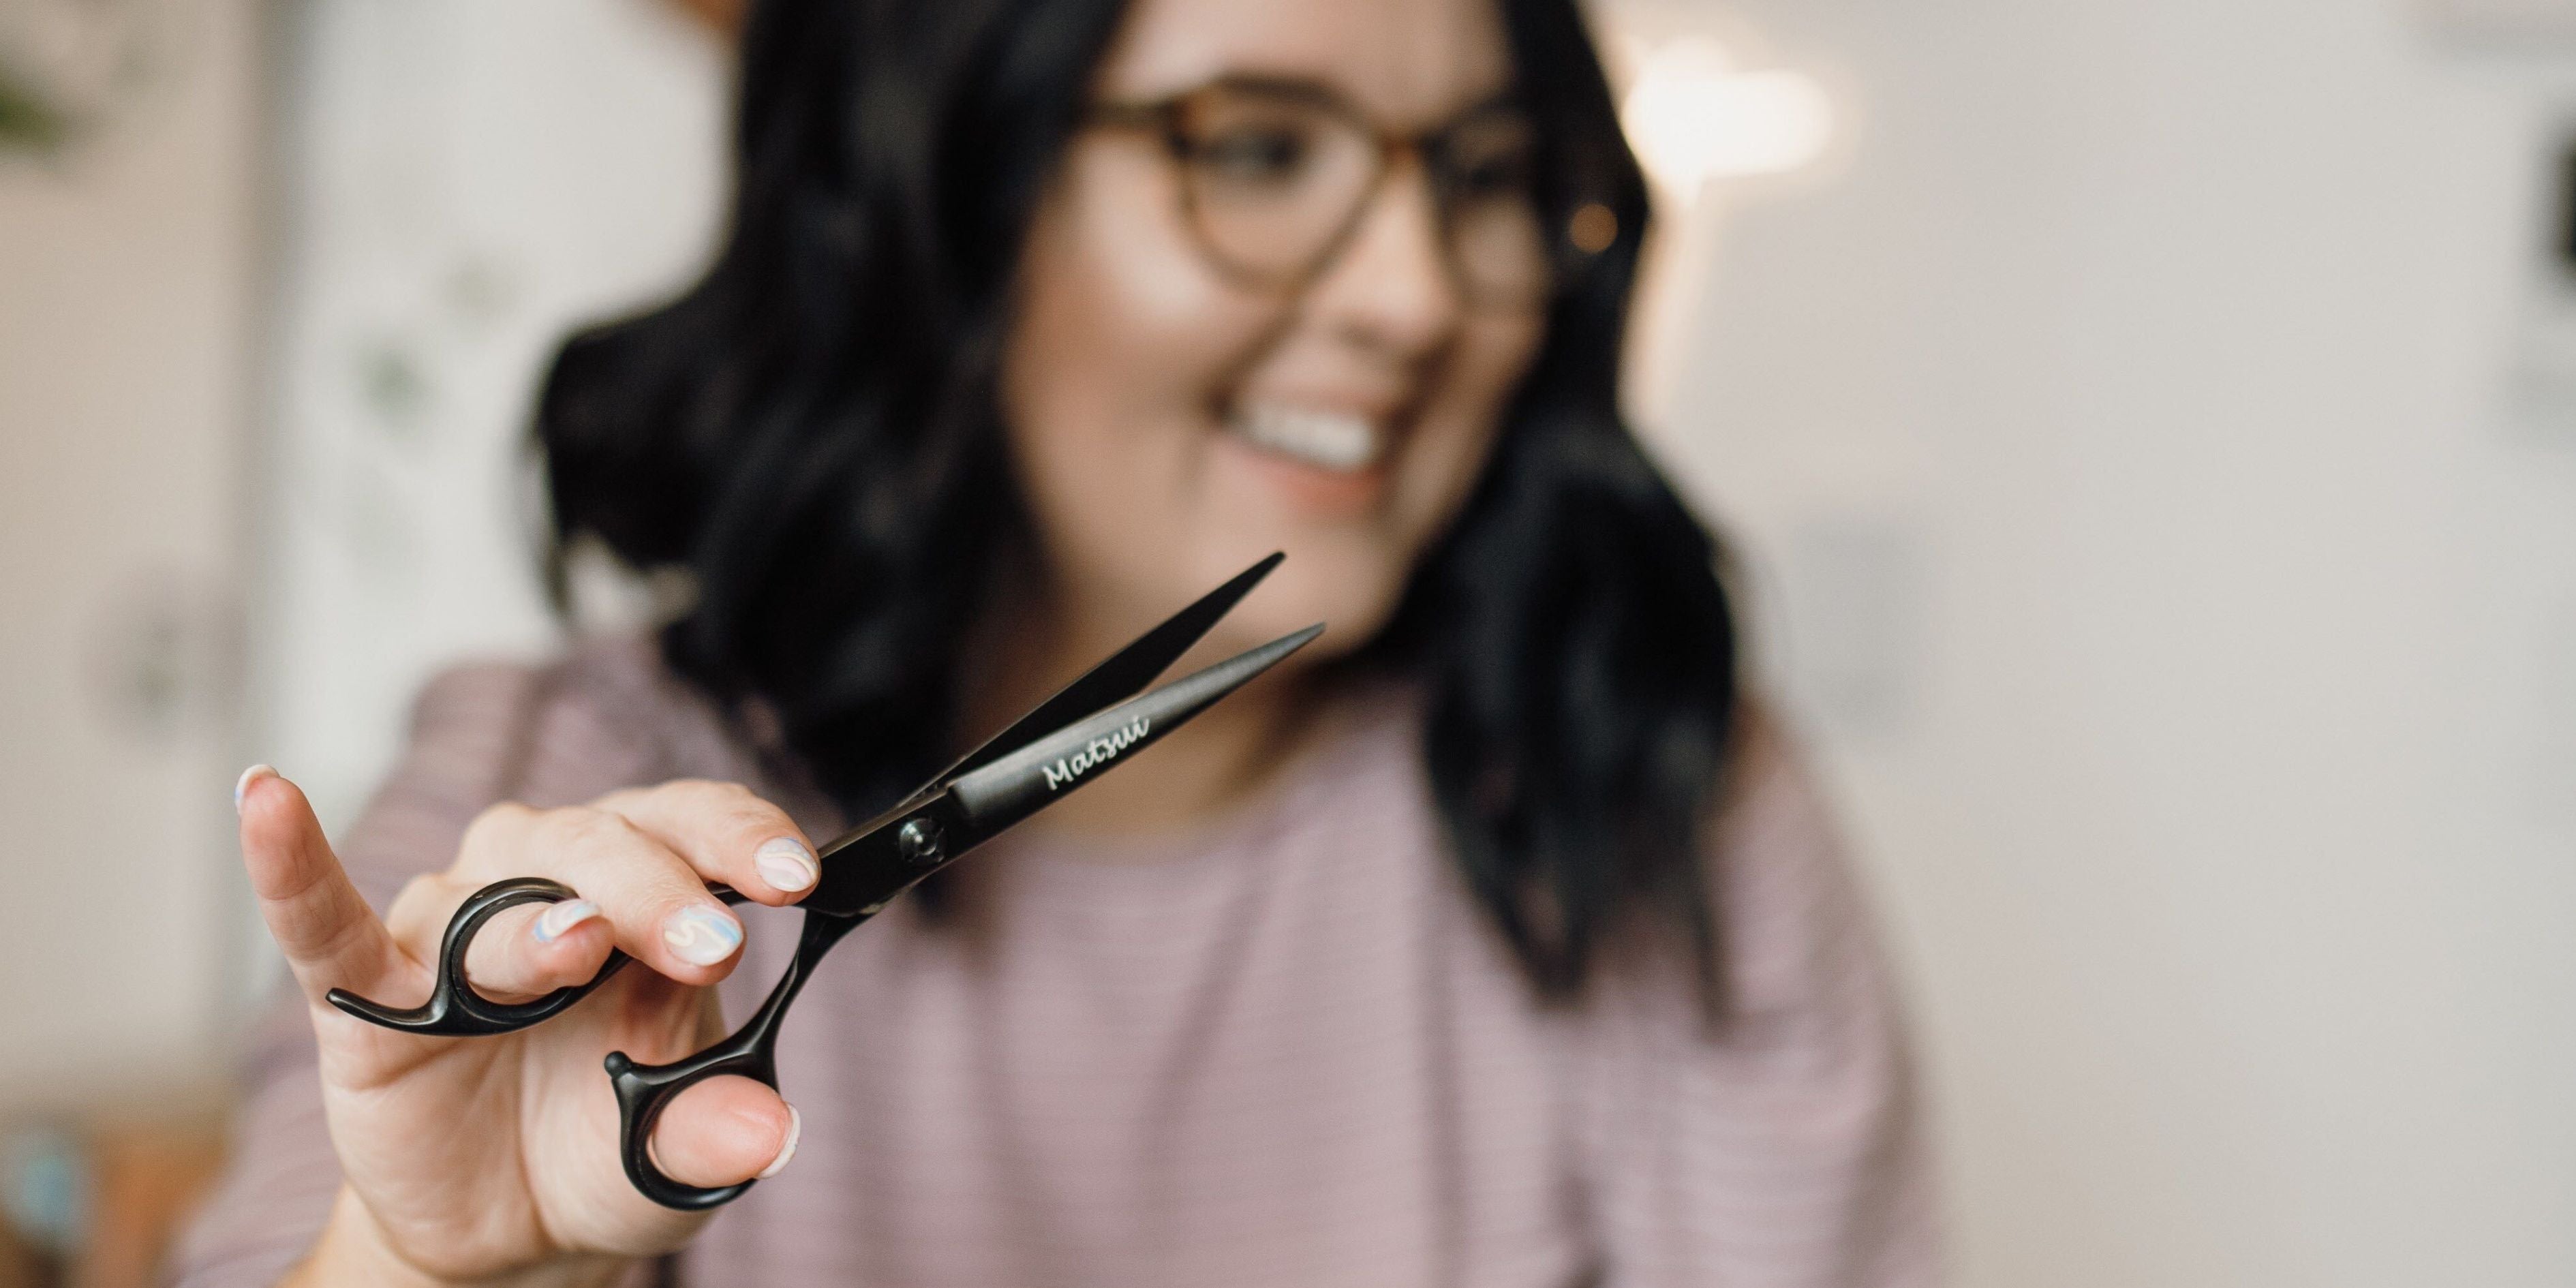 Guide to choosing hairdressing scissors